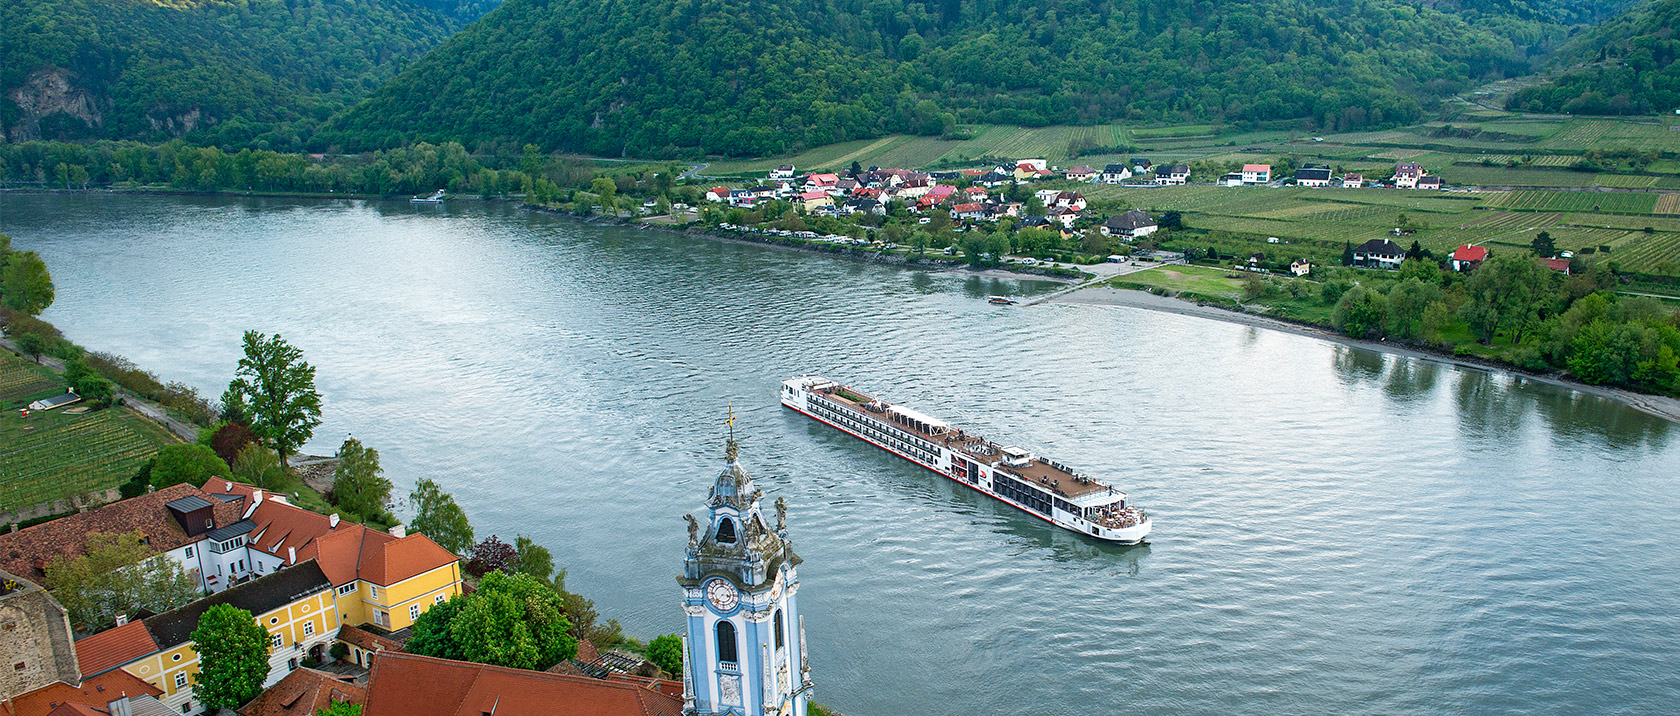 Aerial view of a Viking river ship sailing past Dürnstein, Austria along the Danube river